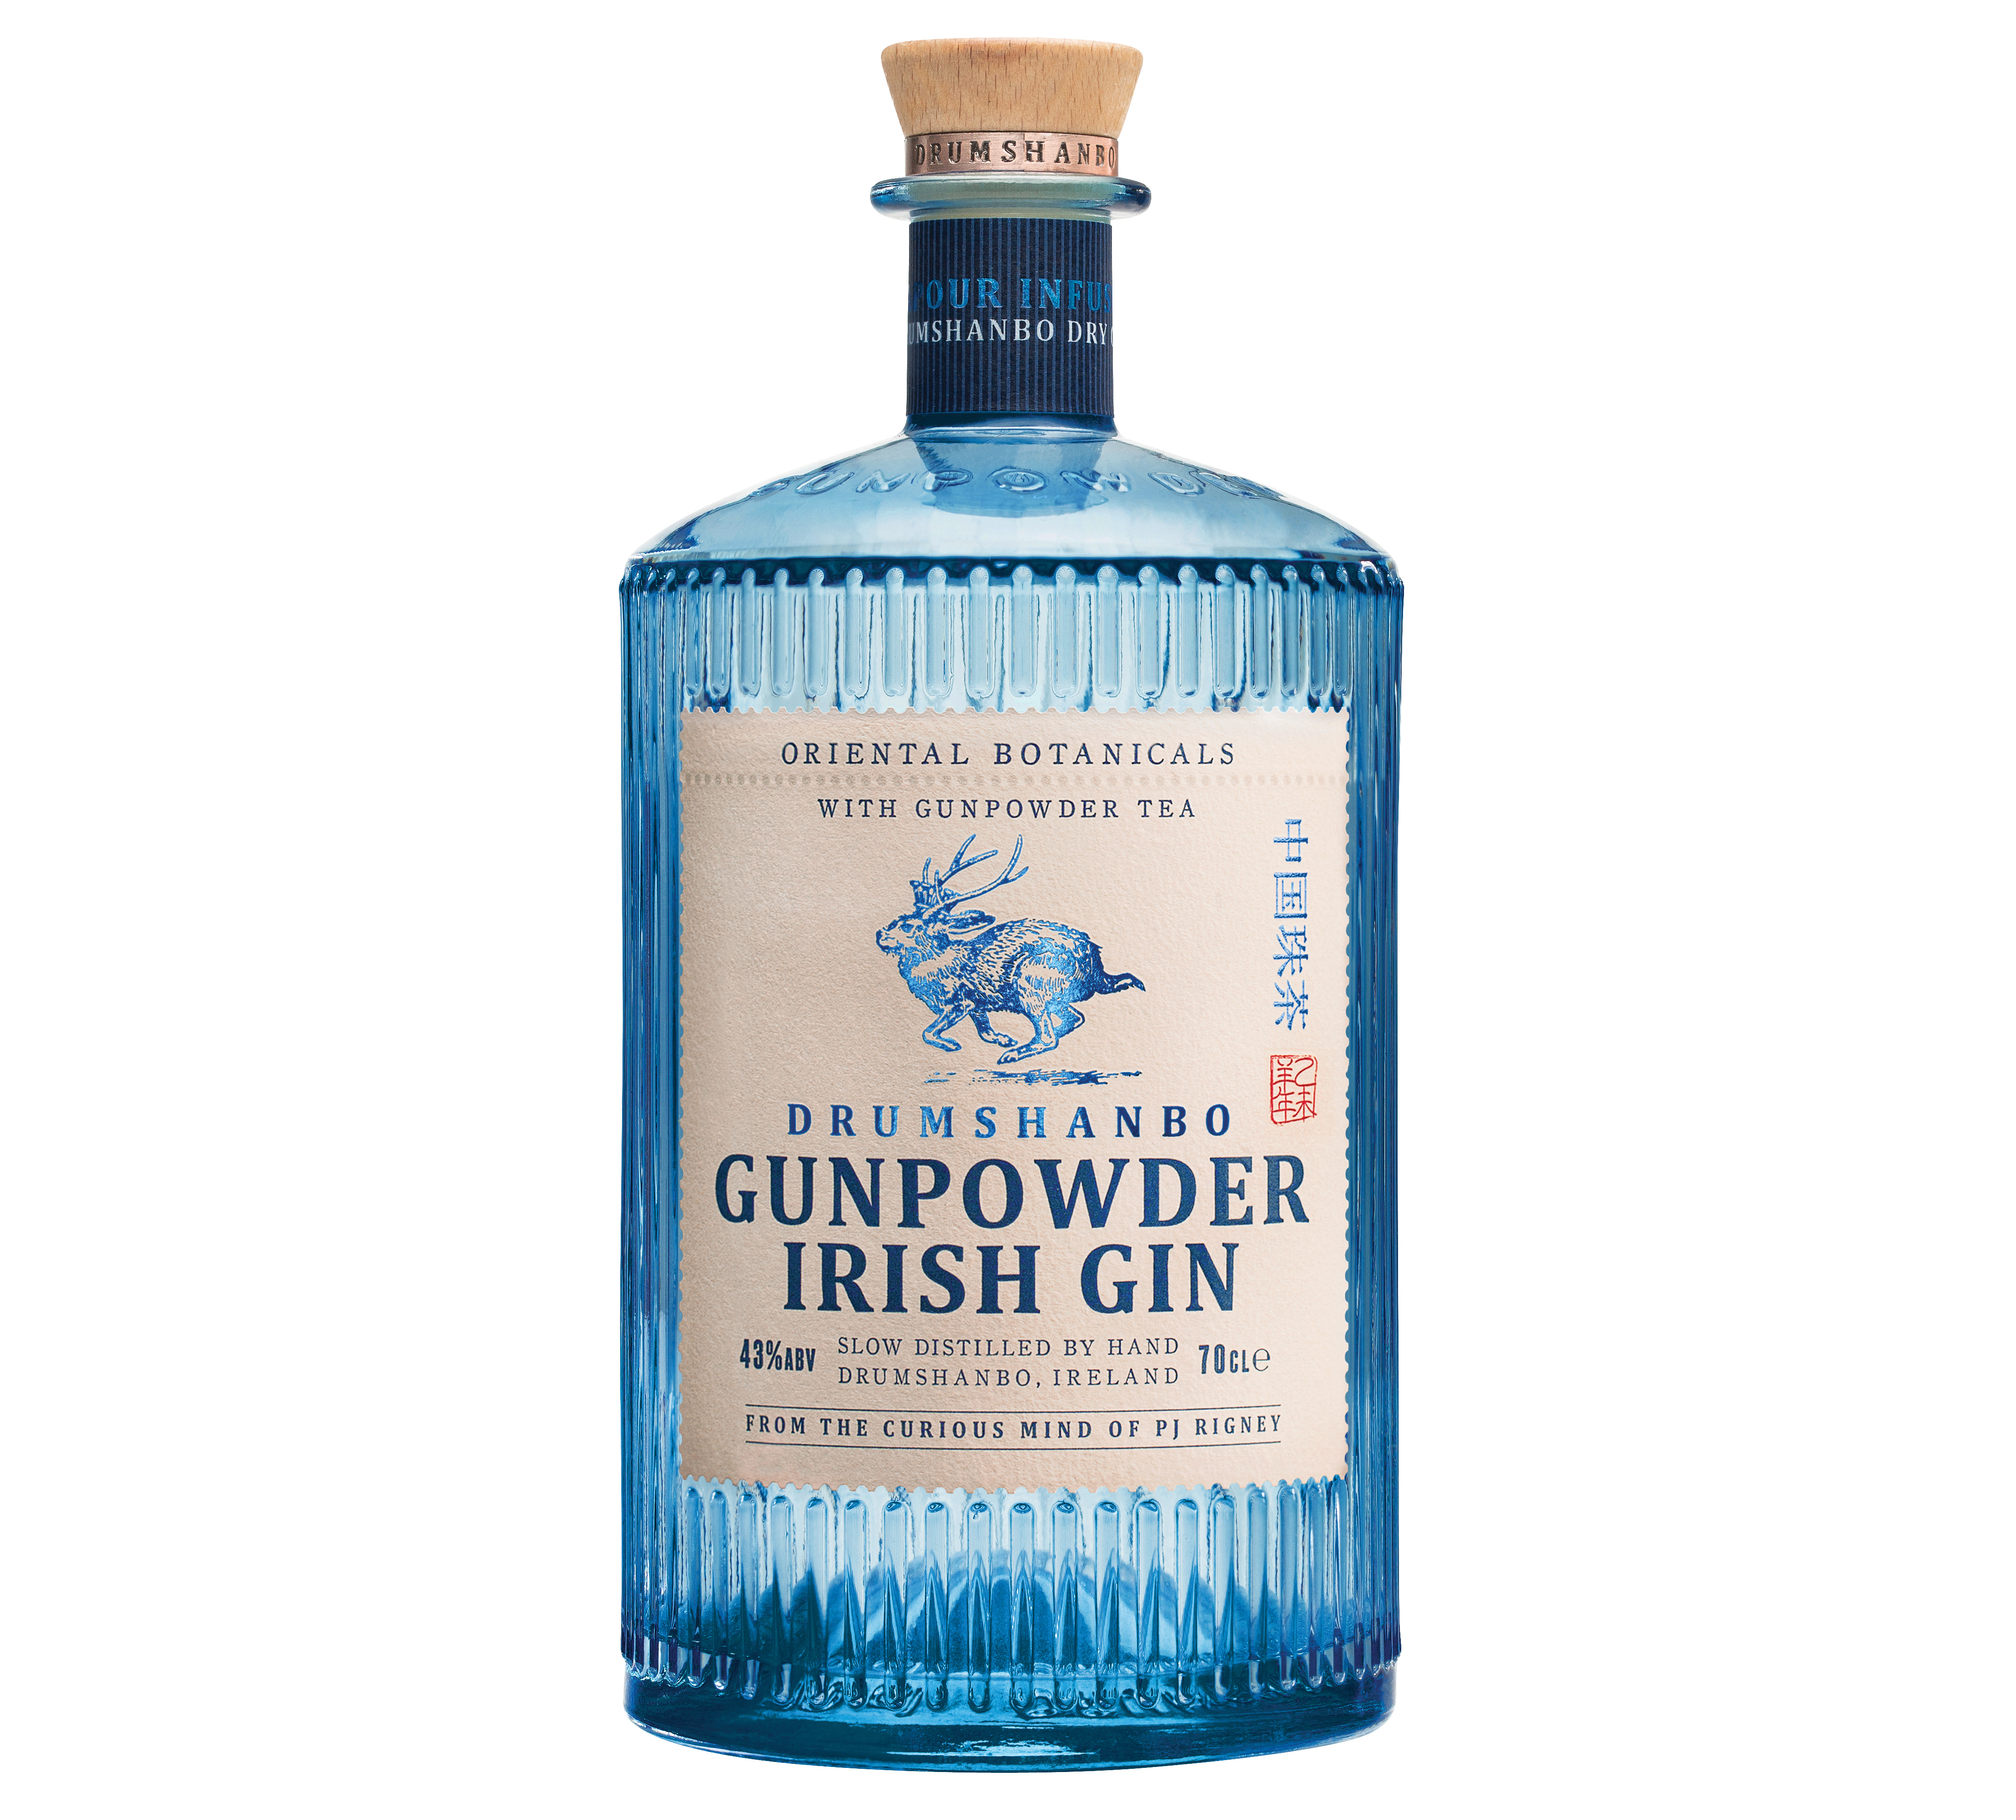 Irish gin. Джин Drumshanbo Gunpowder Irish Gin 43% 0,5л. Ганпаудер Айриш Джин. Драмшанбо Ганпаудер Айриш Джин. Джин Drumshanbo Gunpowder Irish.